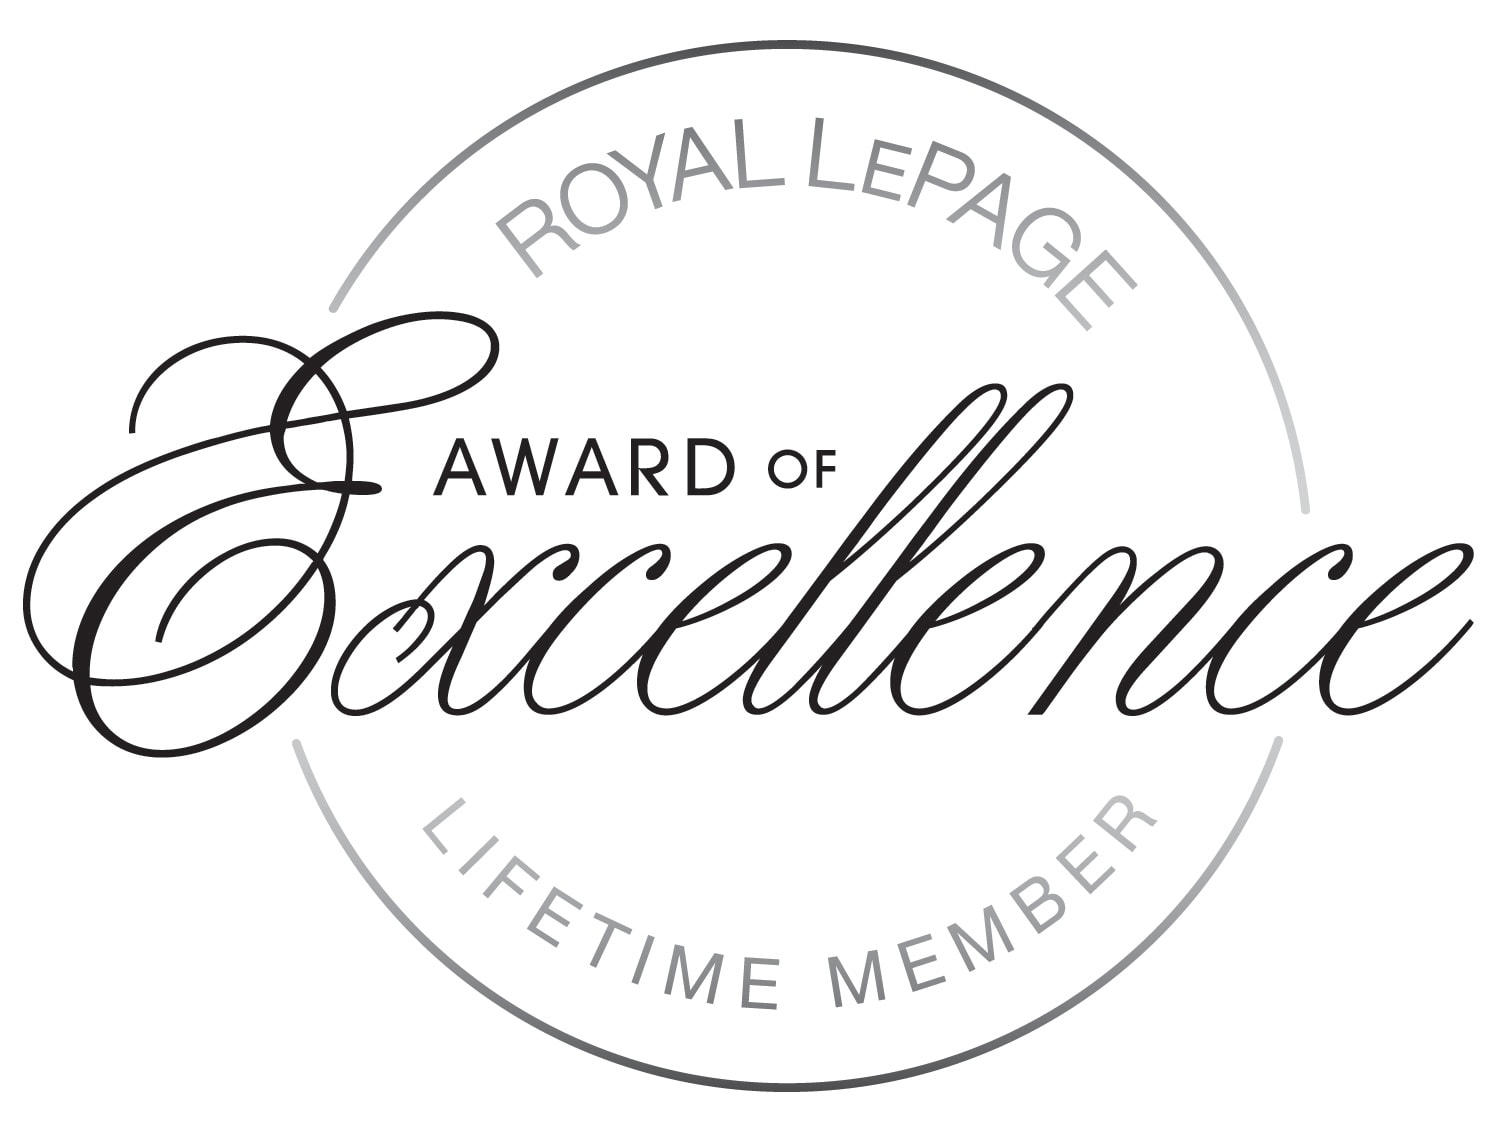 Excellence Award | Team Zold Real Estate Awards